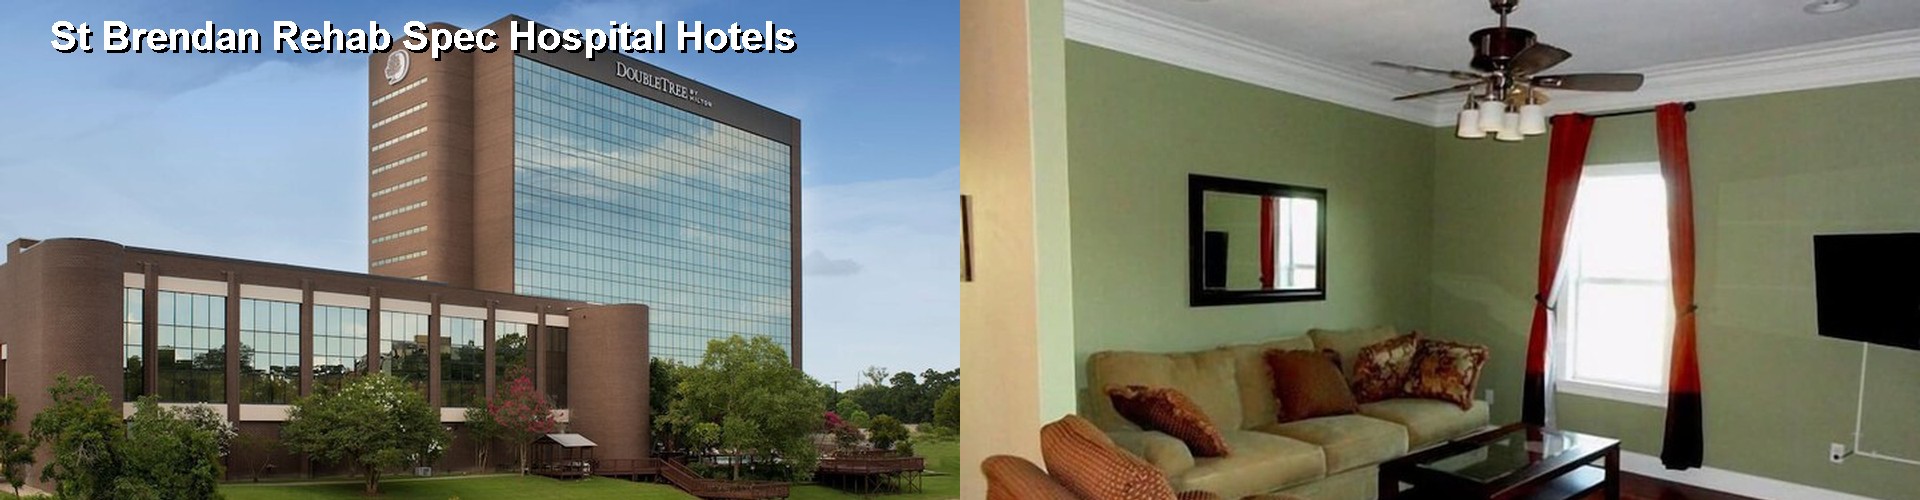 5 Best Hotels near St Brendan Rehab Spec Hospital